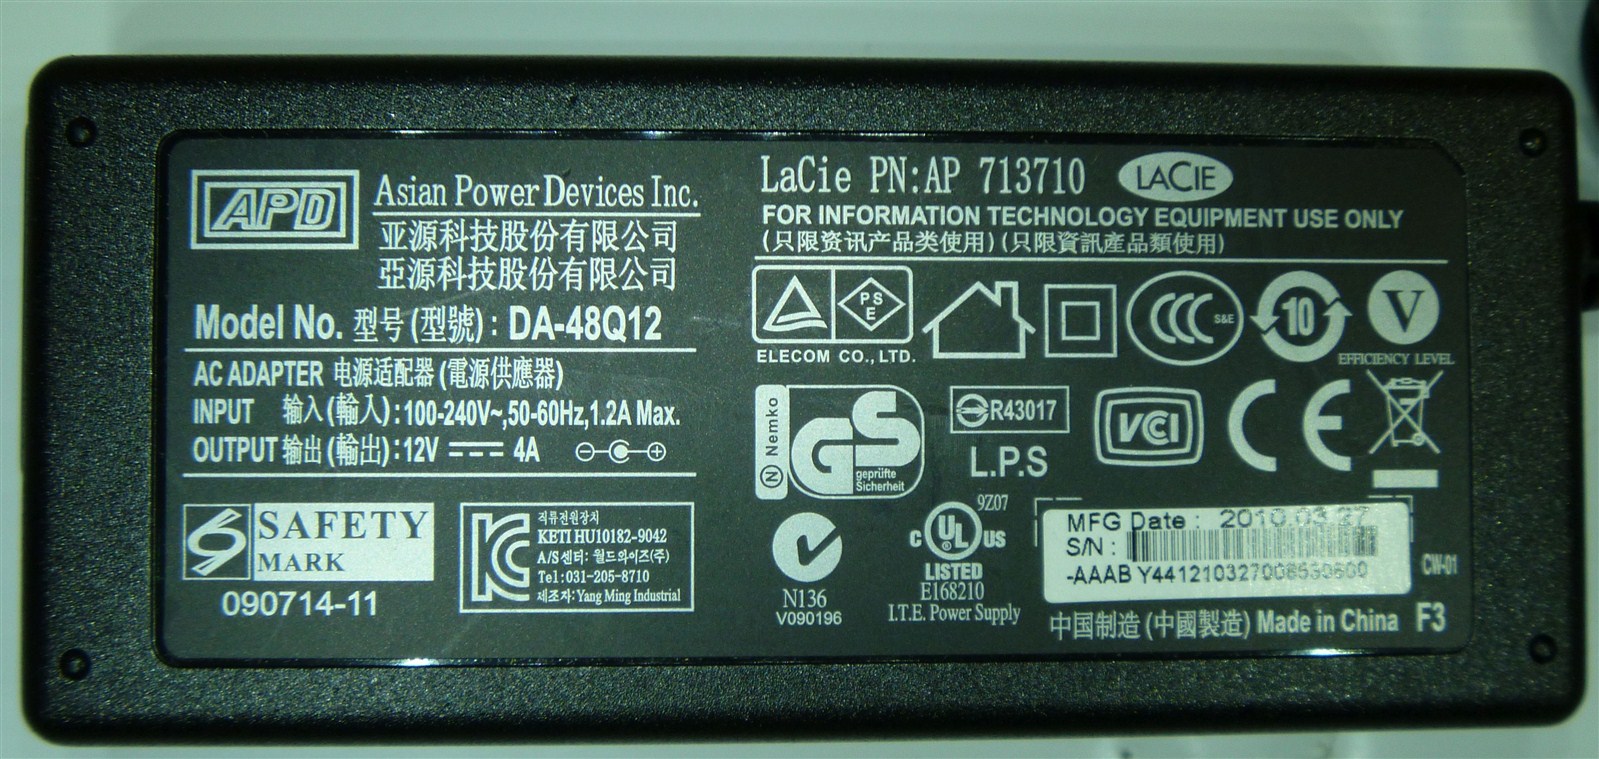 12V DC 4A LaCie 713710 APD Asian Power Devices DA-48Q12 AC Adapter